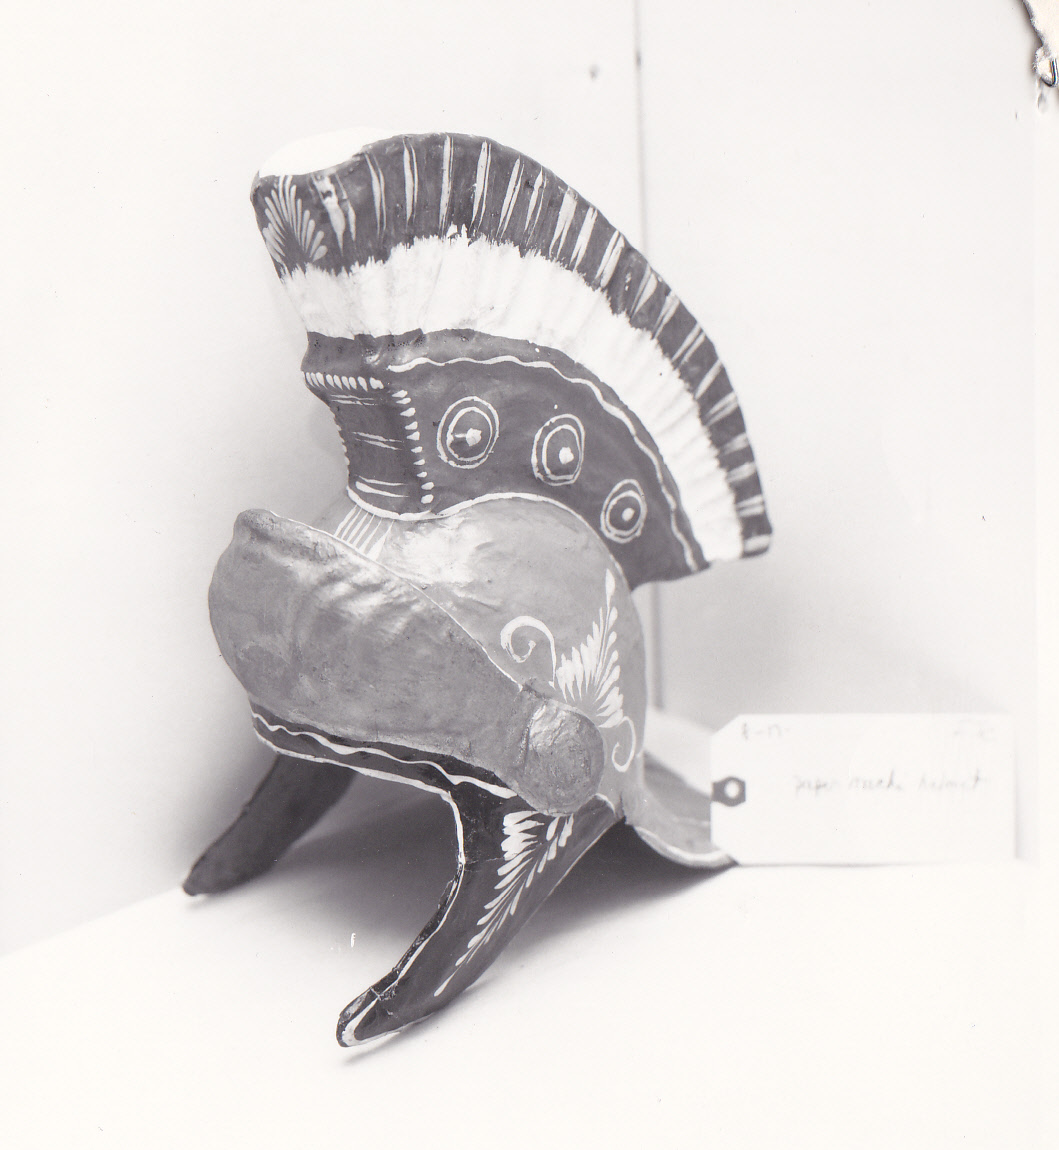 Object: Costume helmet (Roman Centurion’s Costume Helmet)